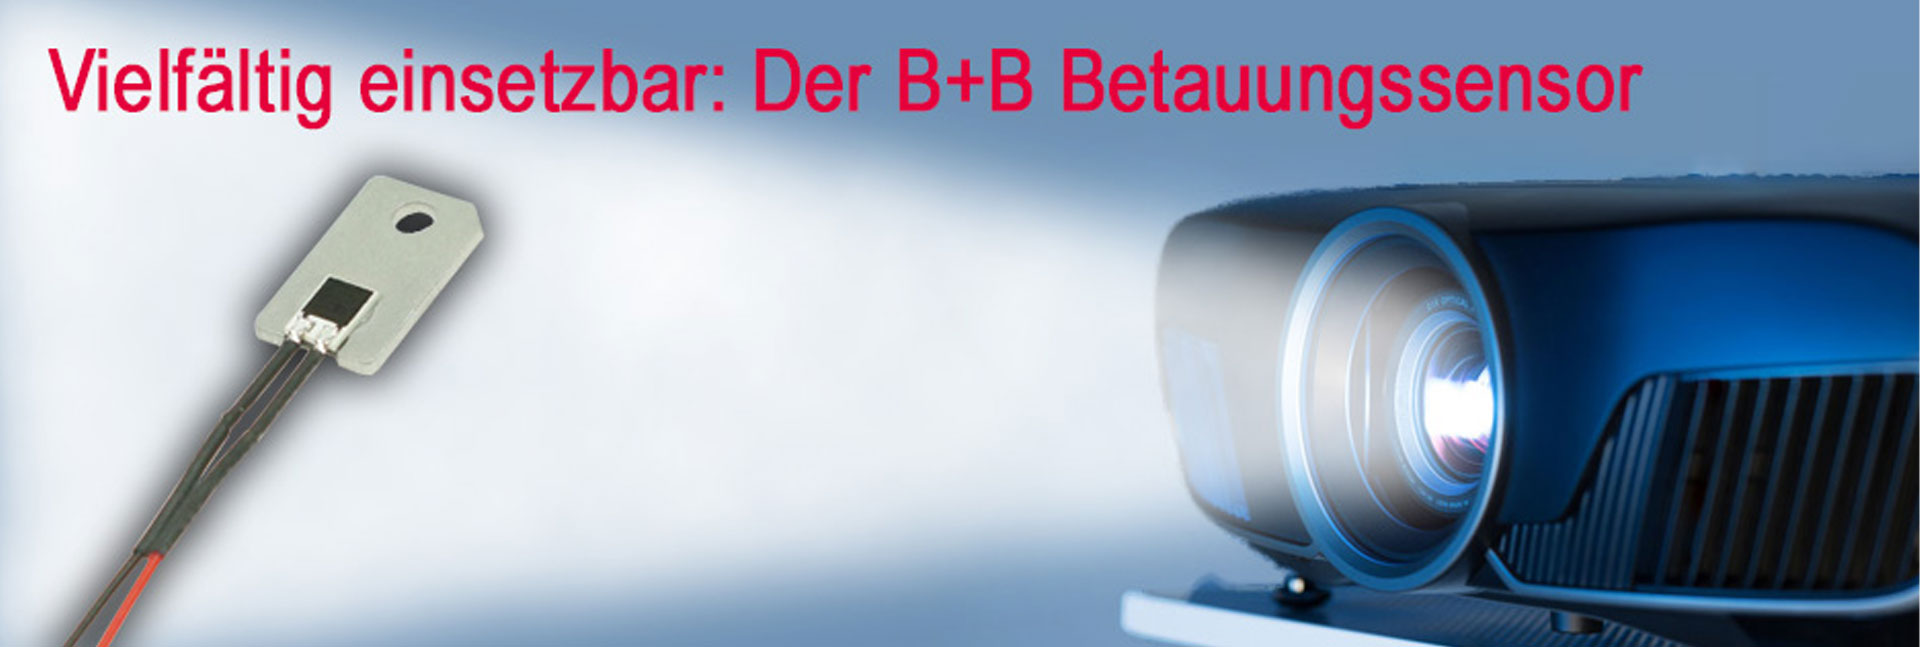 B+B Thermo-Technik GmbH | Donaueschingen | Messtechnik | Measurement technology | Betauungssensor